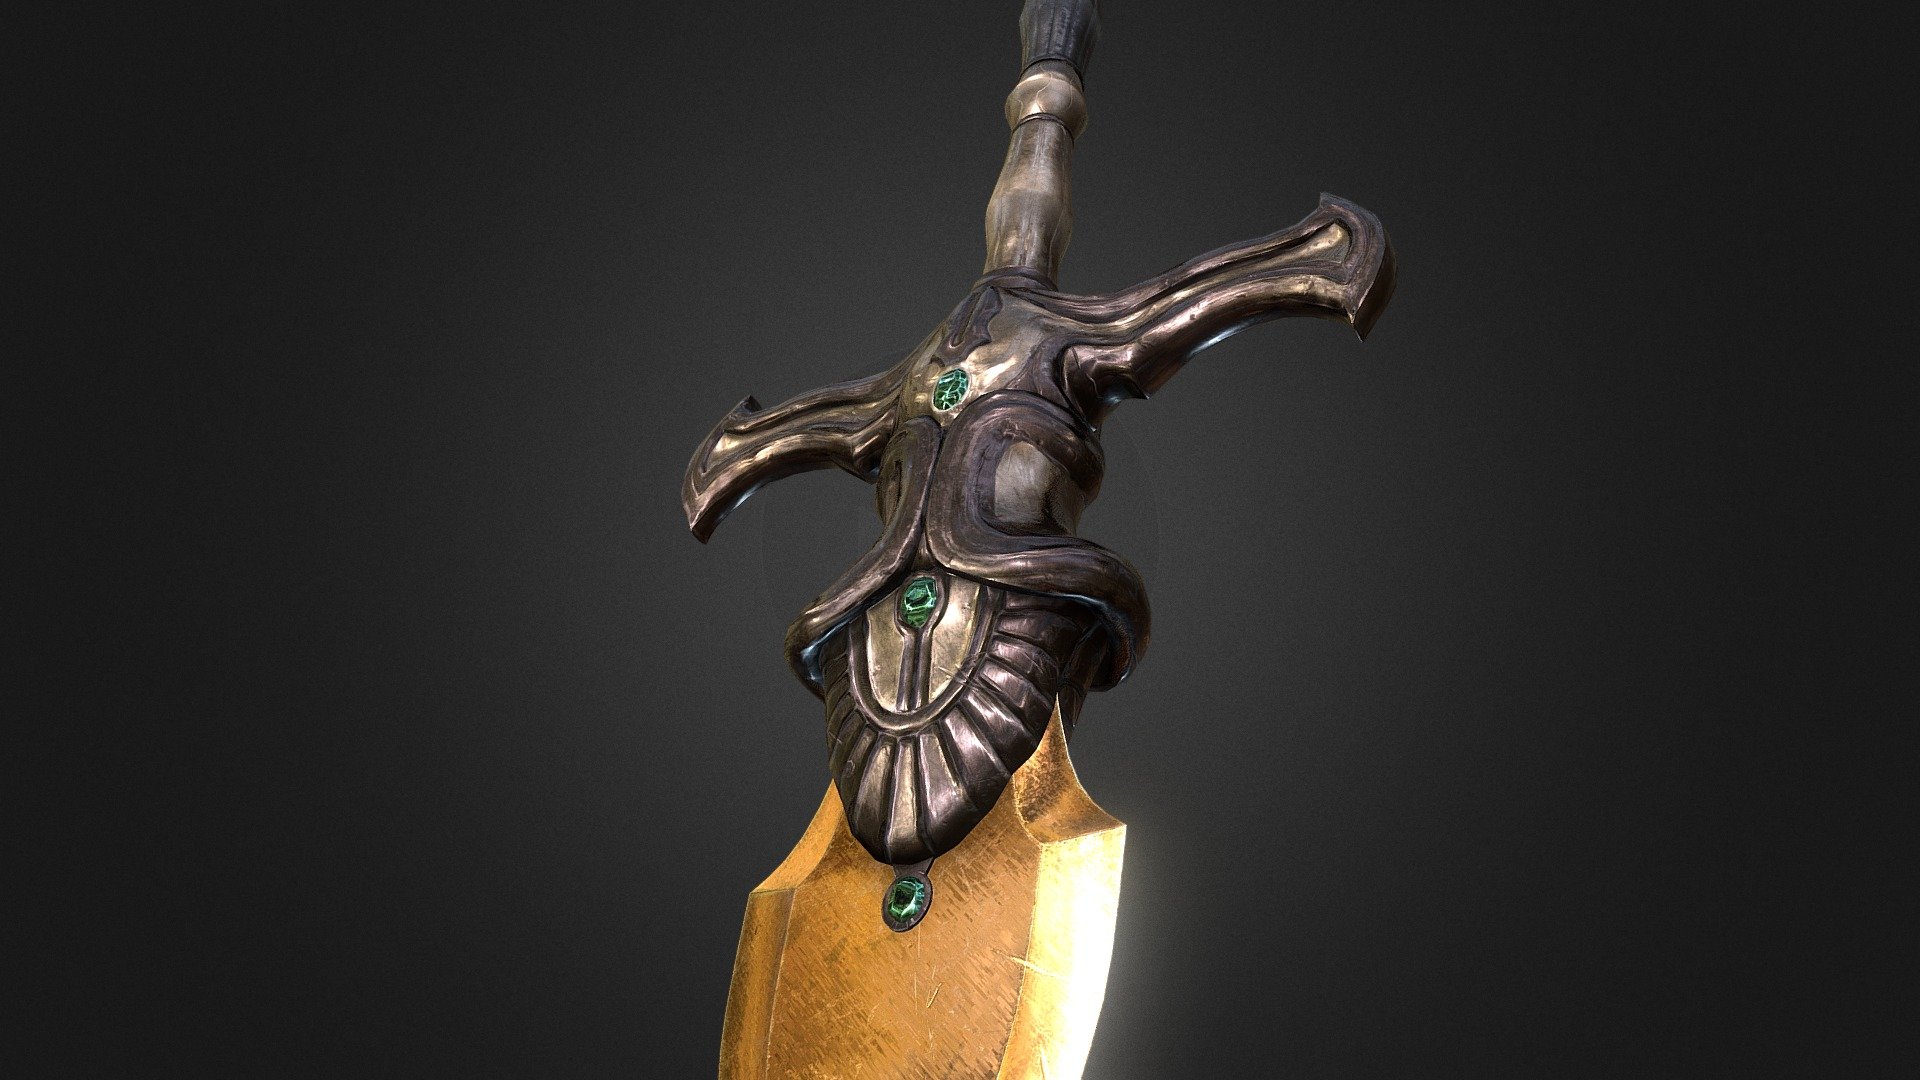 Fan-art model of Ike's sword (from Fire Emblem: Path of Radiance). 7k tris, game-engine ready 3d model